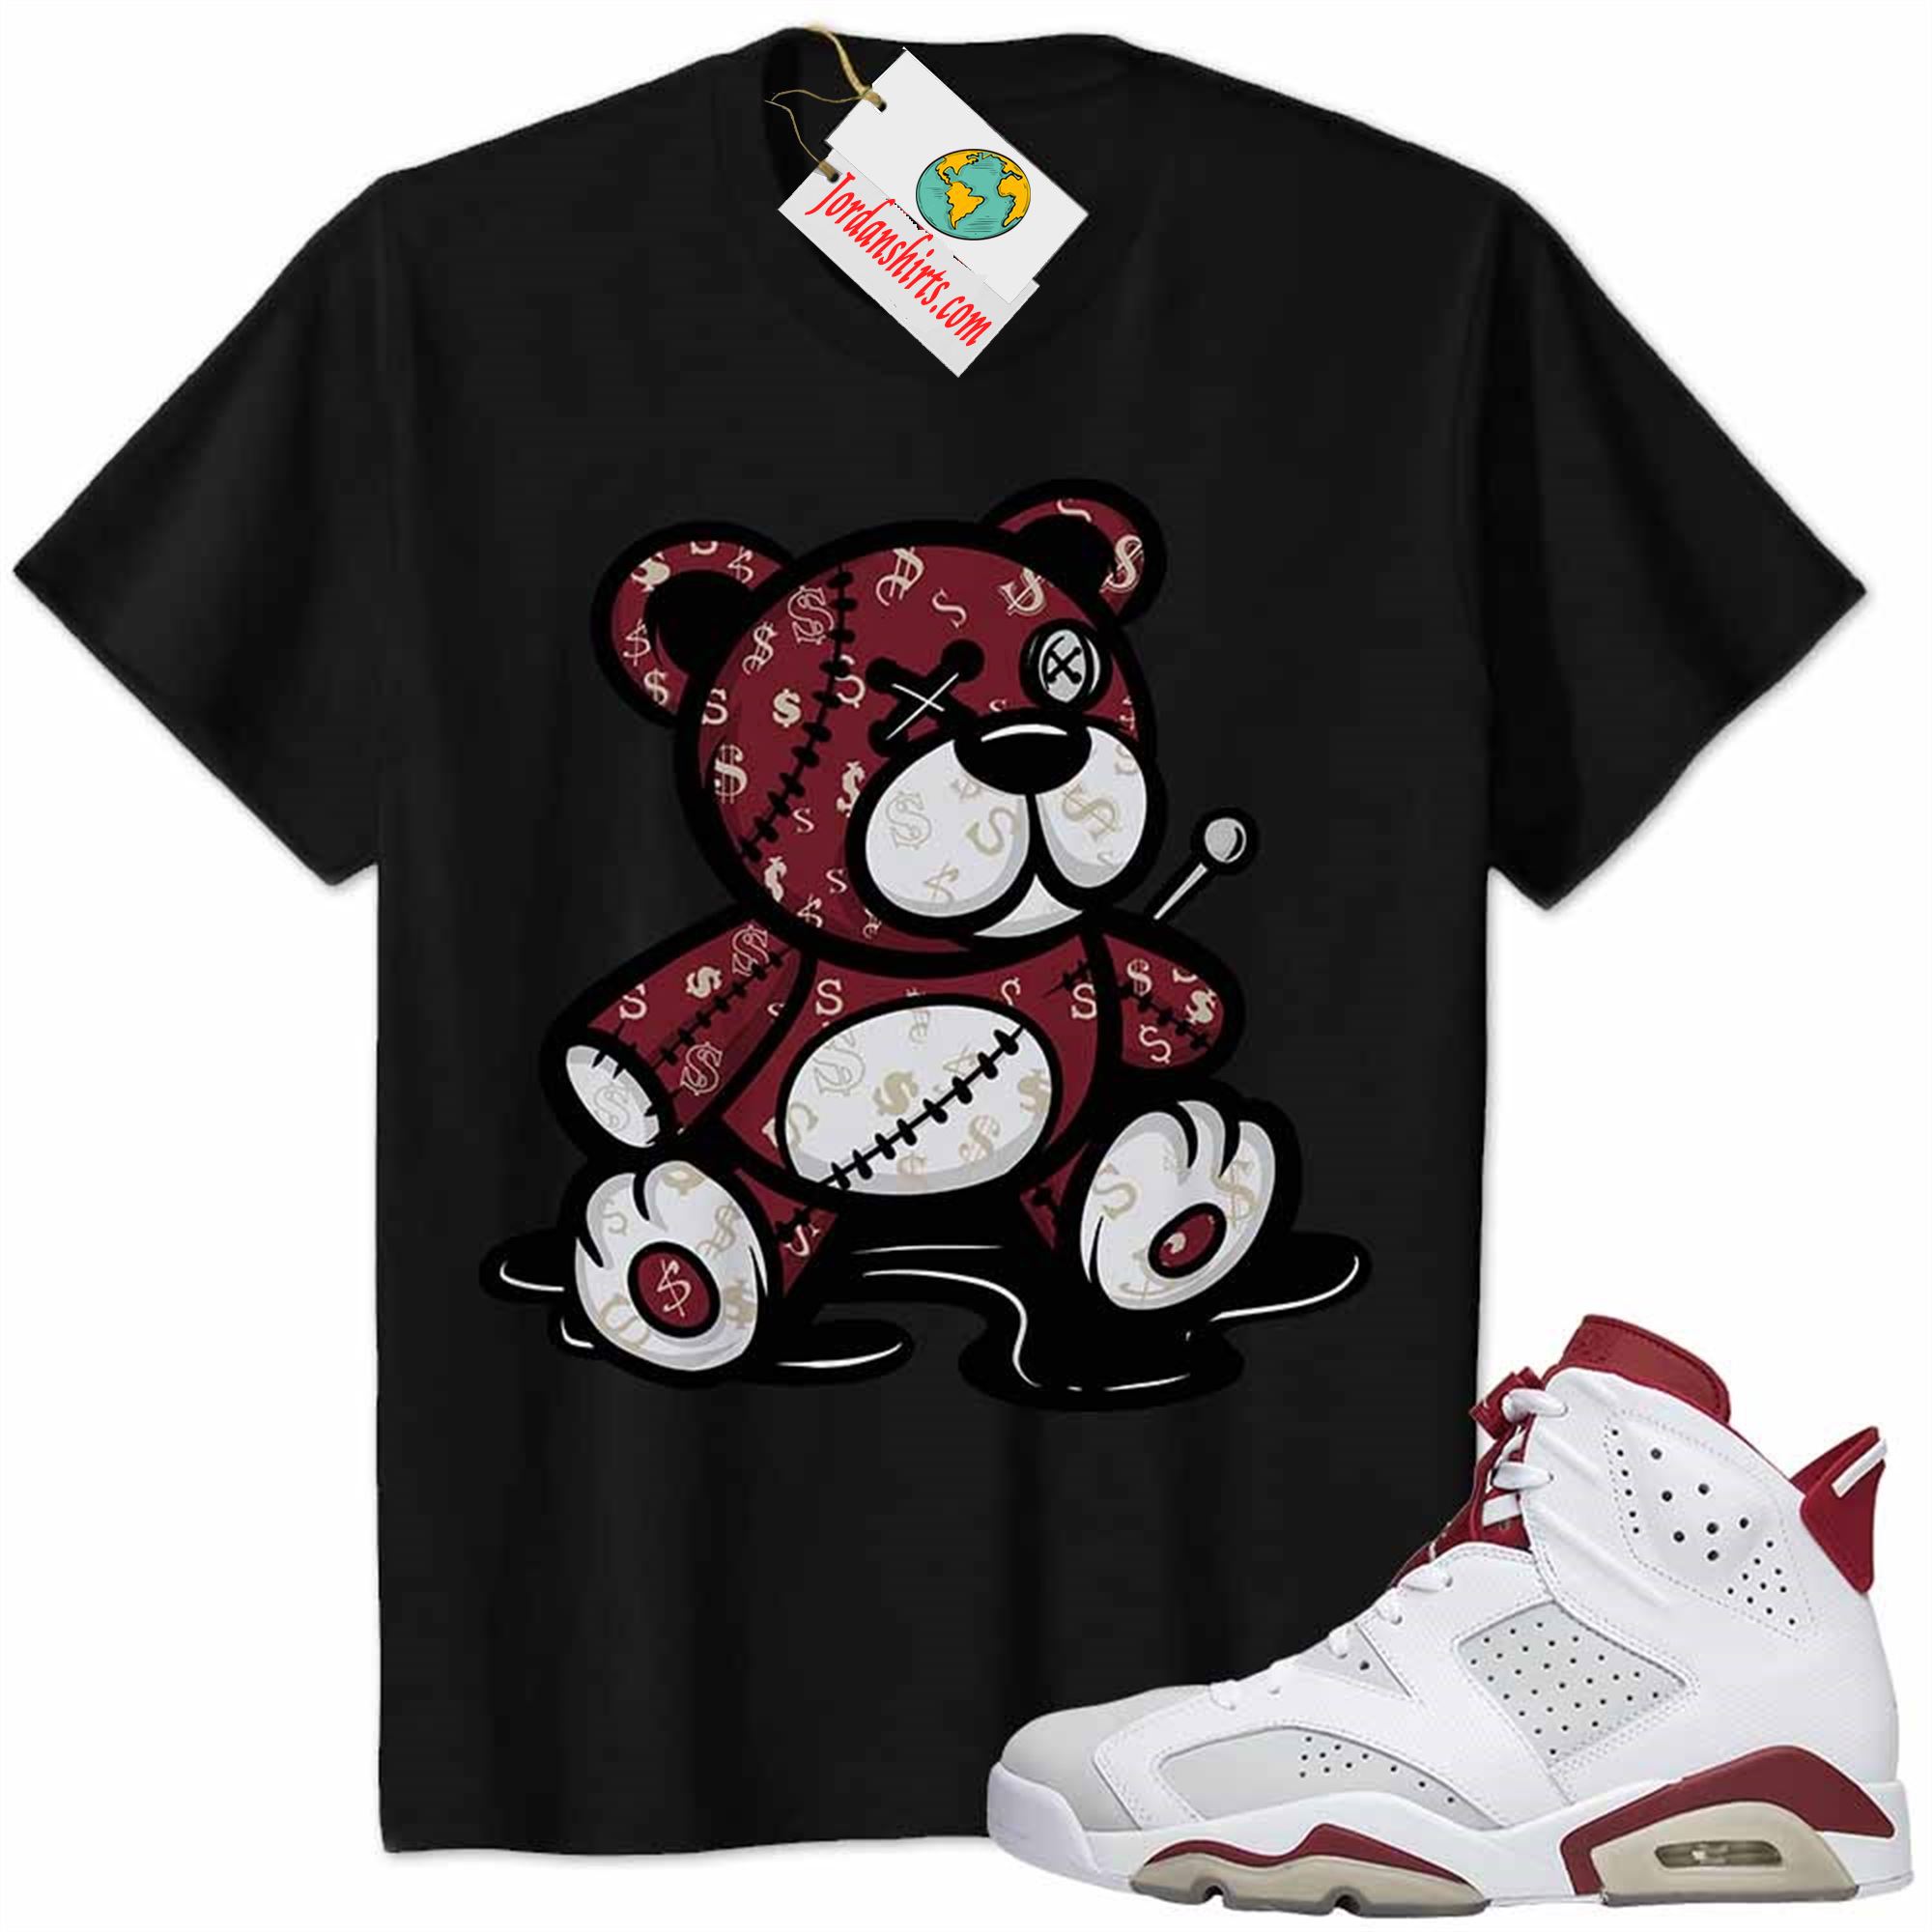 Jordan 6 Shirt, Jordan 6 Alternate Shirt Teddy Bear All Money In Black Size Up To 5xl